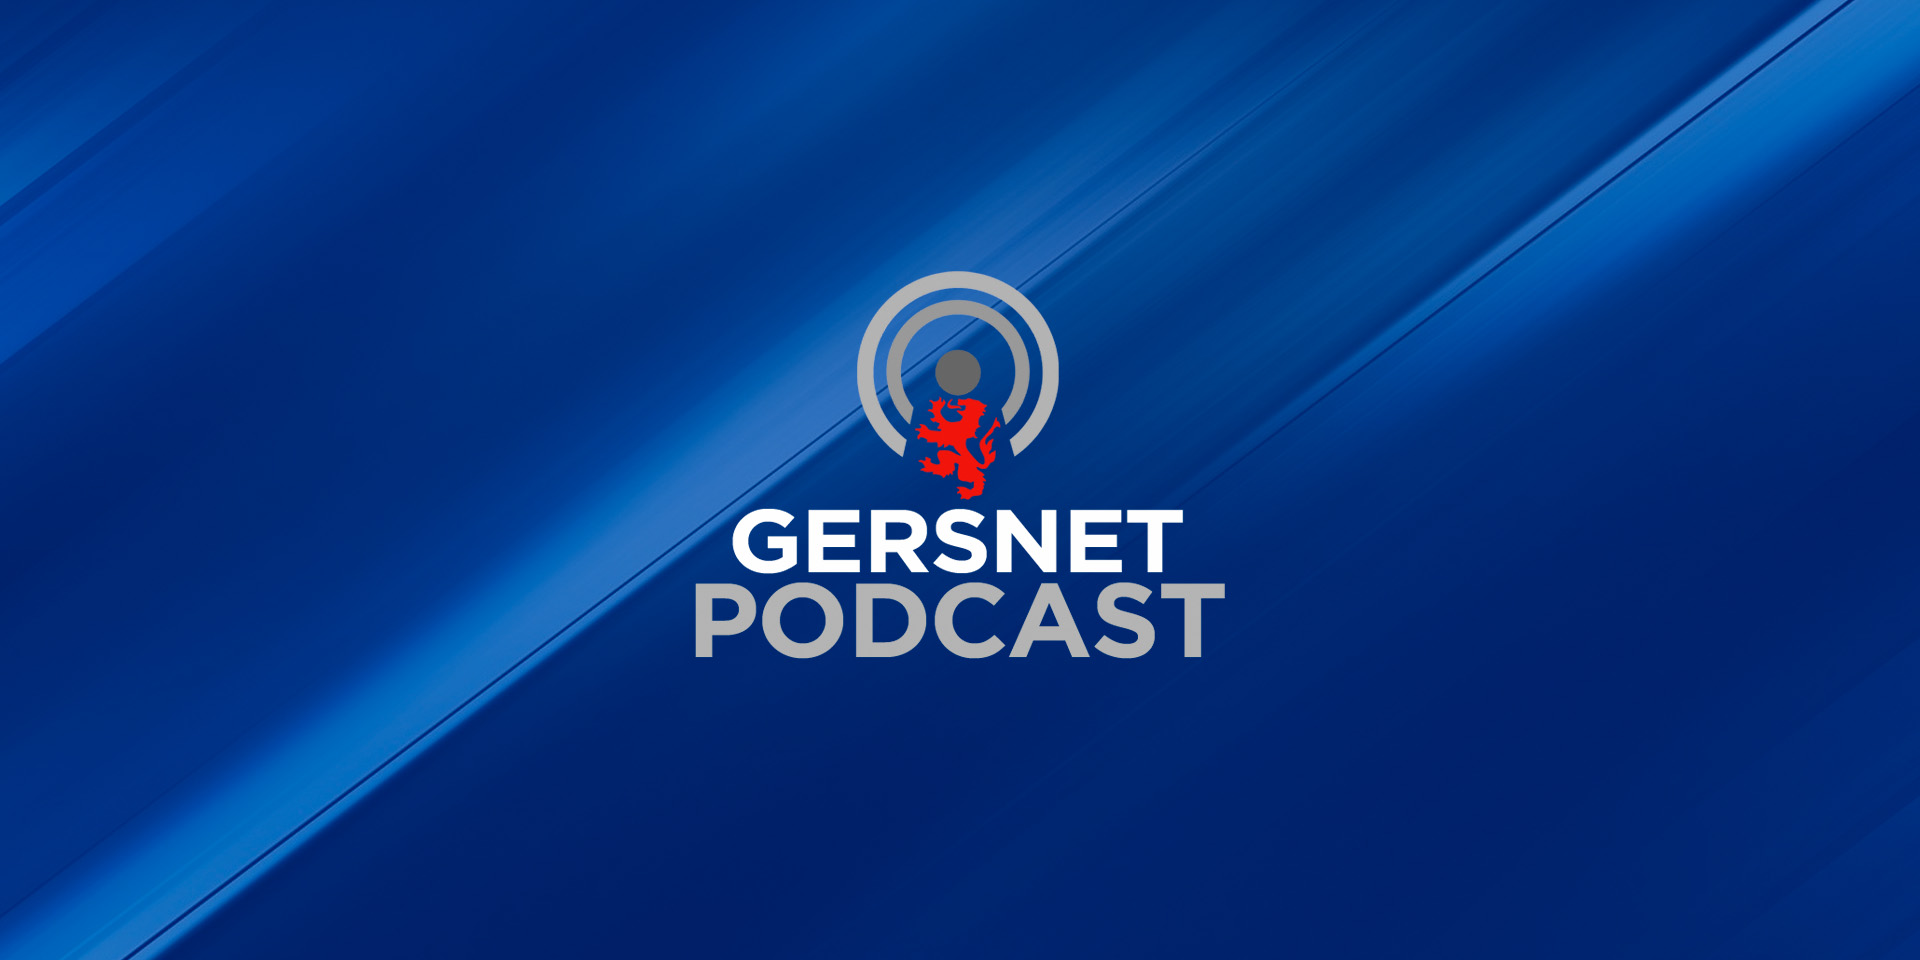 Gersnet Podcast 290 - St Mirren Preview